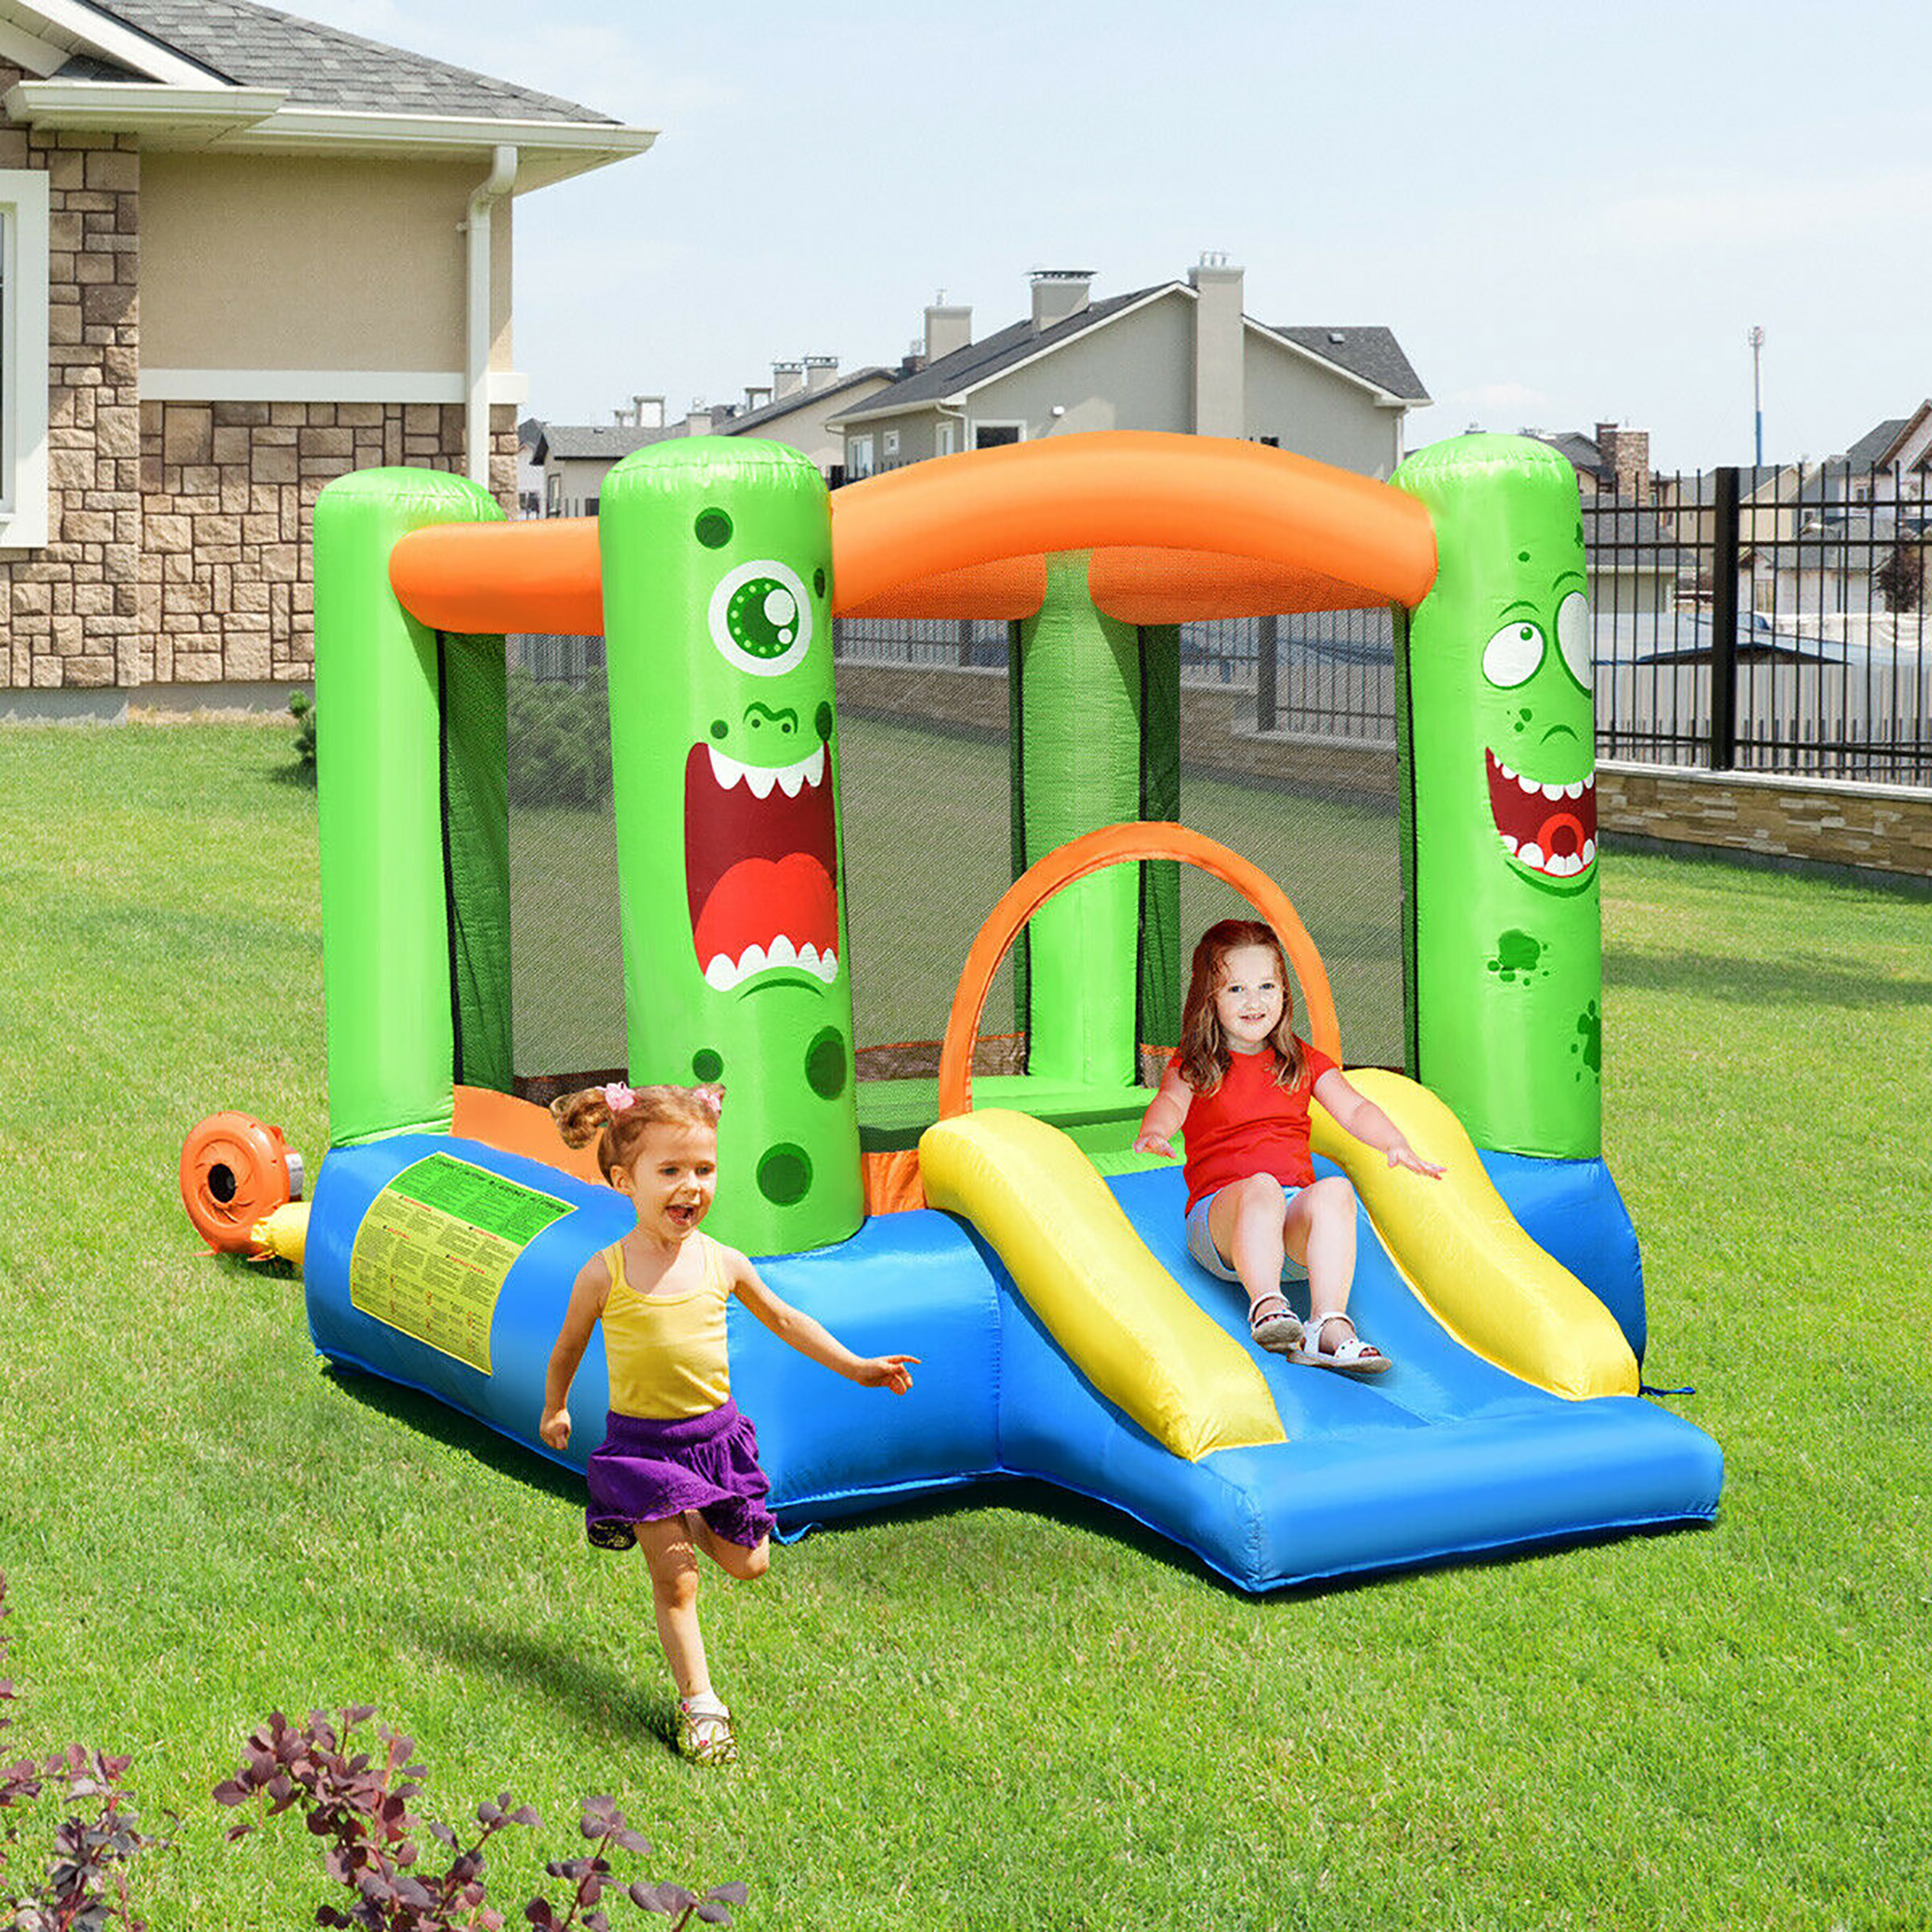 Costway Inflatable Bounce House Jumper Castle Kids Playhouse w/ Basketball Hoop & Slide